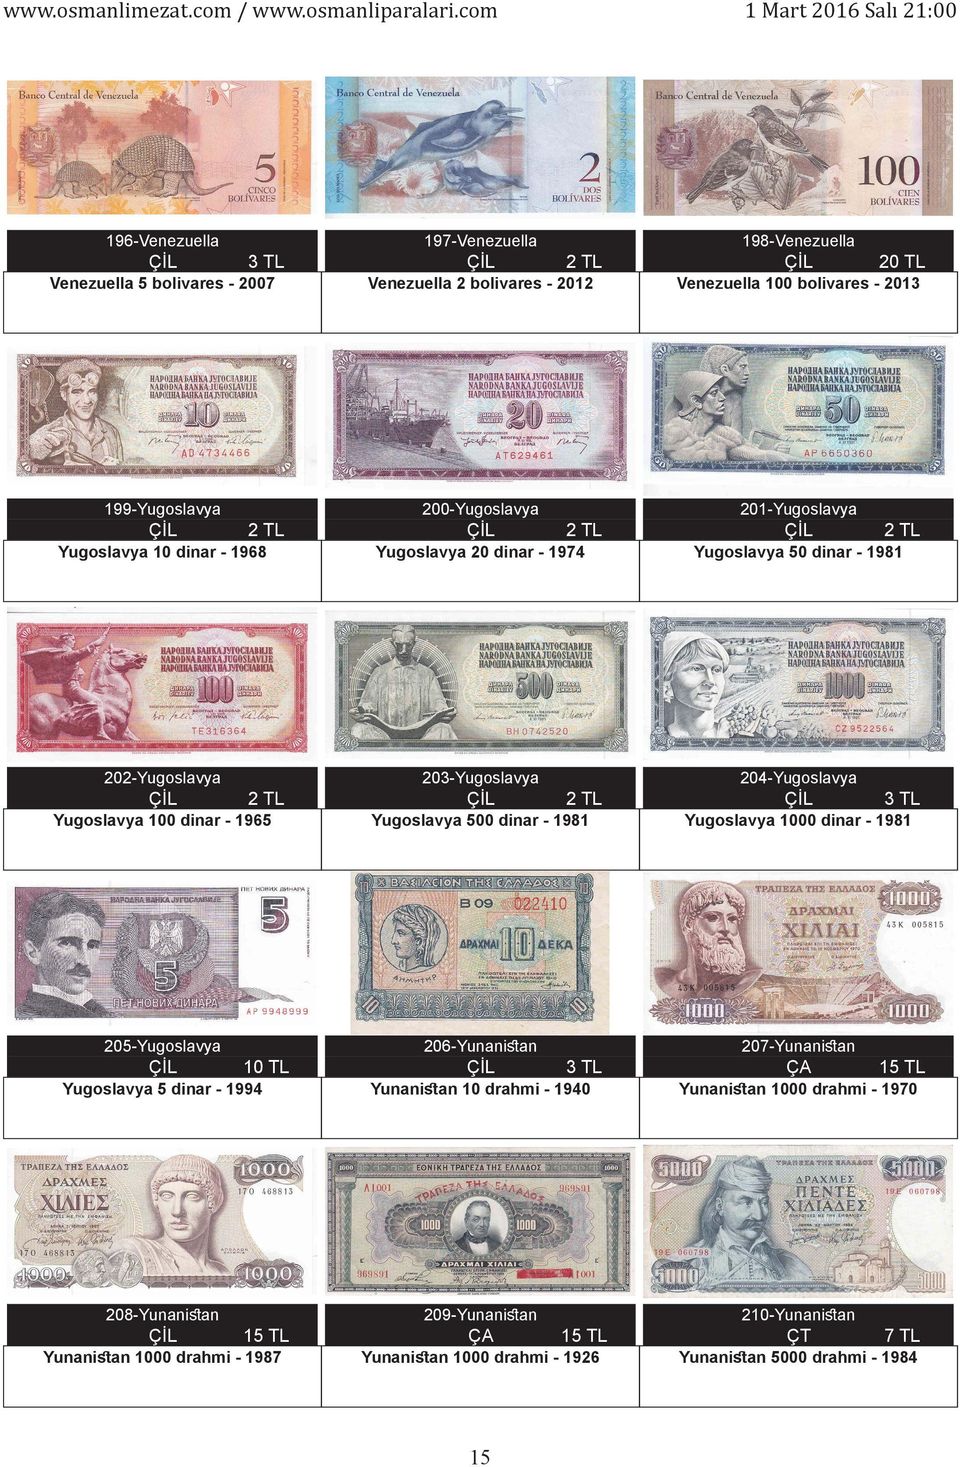 Yugoslavya 500 dinar - 1981 Yugoslavya 1000 dinar - 1981 205-Yugoslavya 206-Yunanistan 207-Yunanistan 10 TL 1 Yugoslavya 5 dinar - 1994 Yunanistan 10 drahmi - 1940